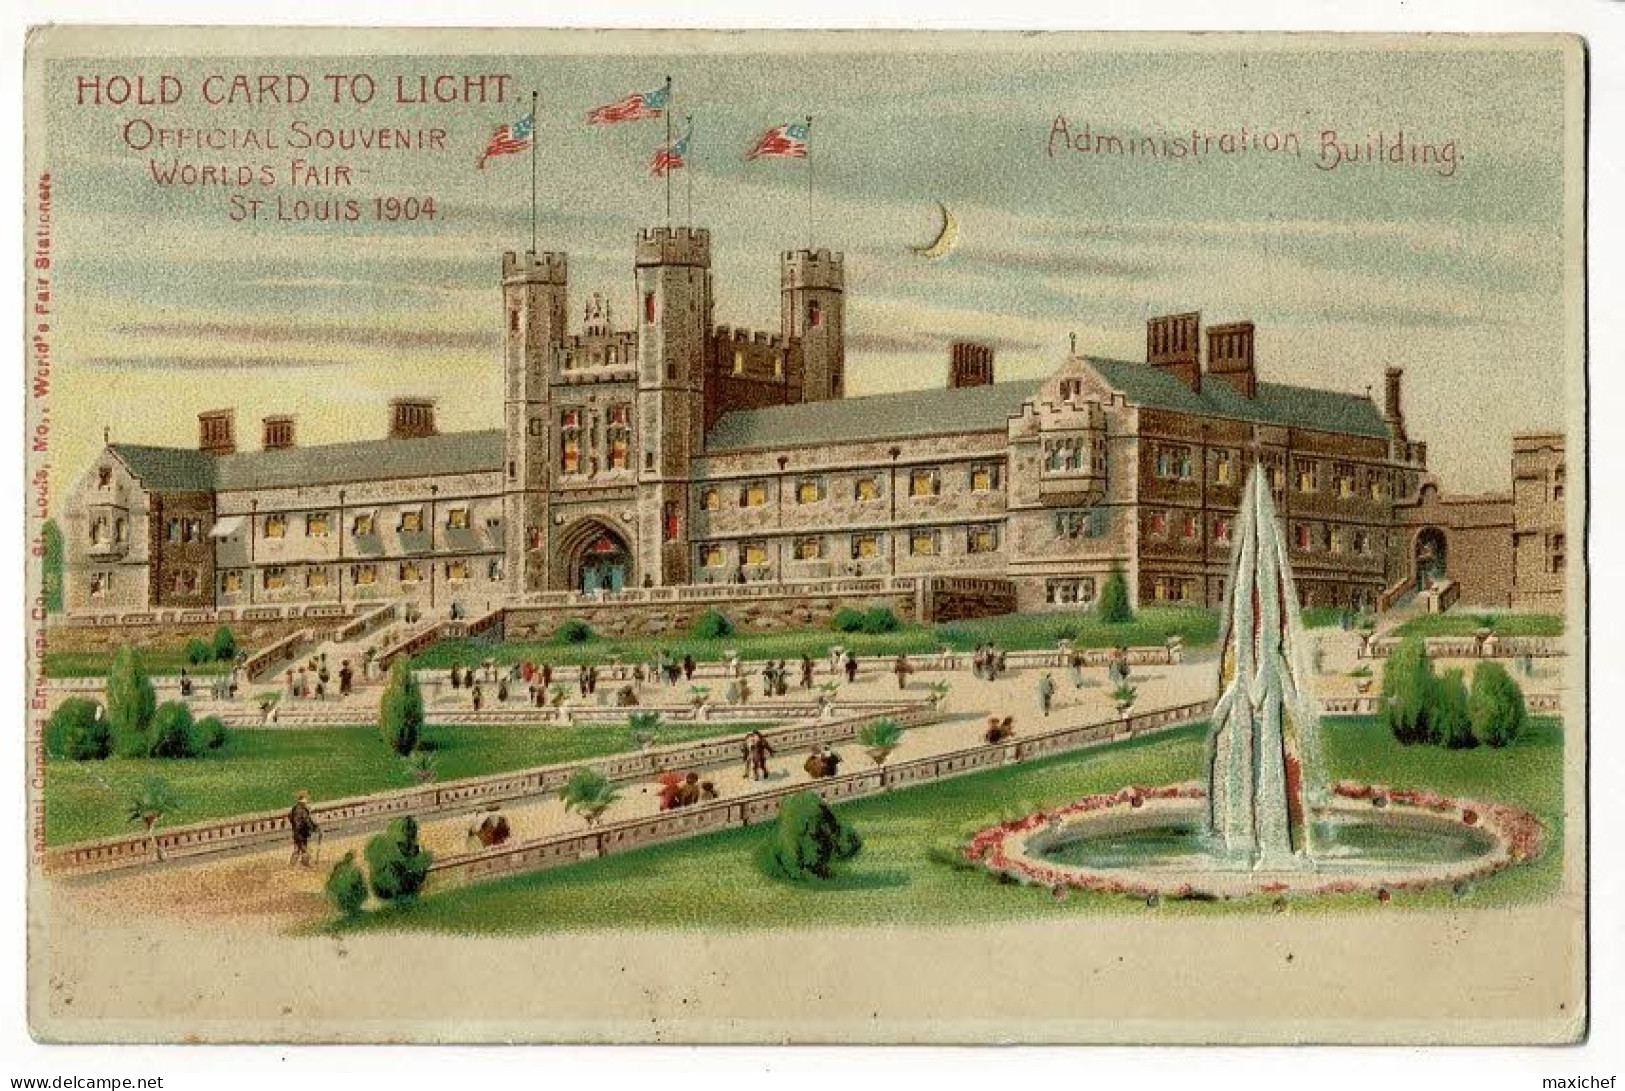 Carte Illustrée Hold Card To Light - Official Souvenir Worlds Fair St Louis 1904 - Administration Building - Pas Circulé - Hold To Light